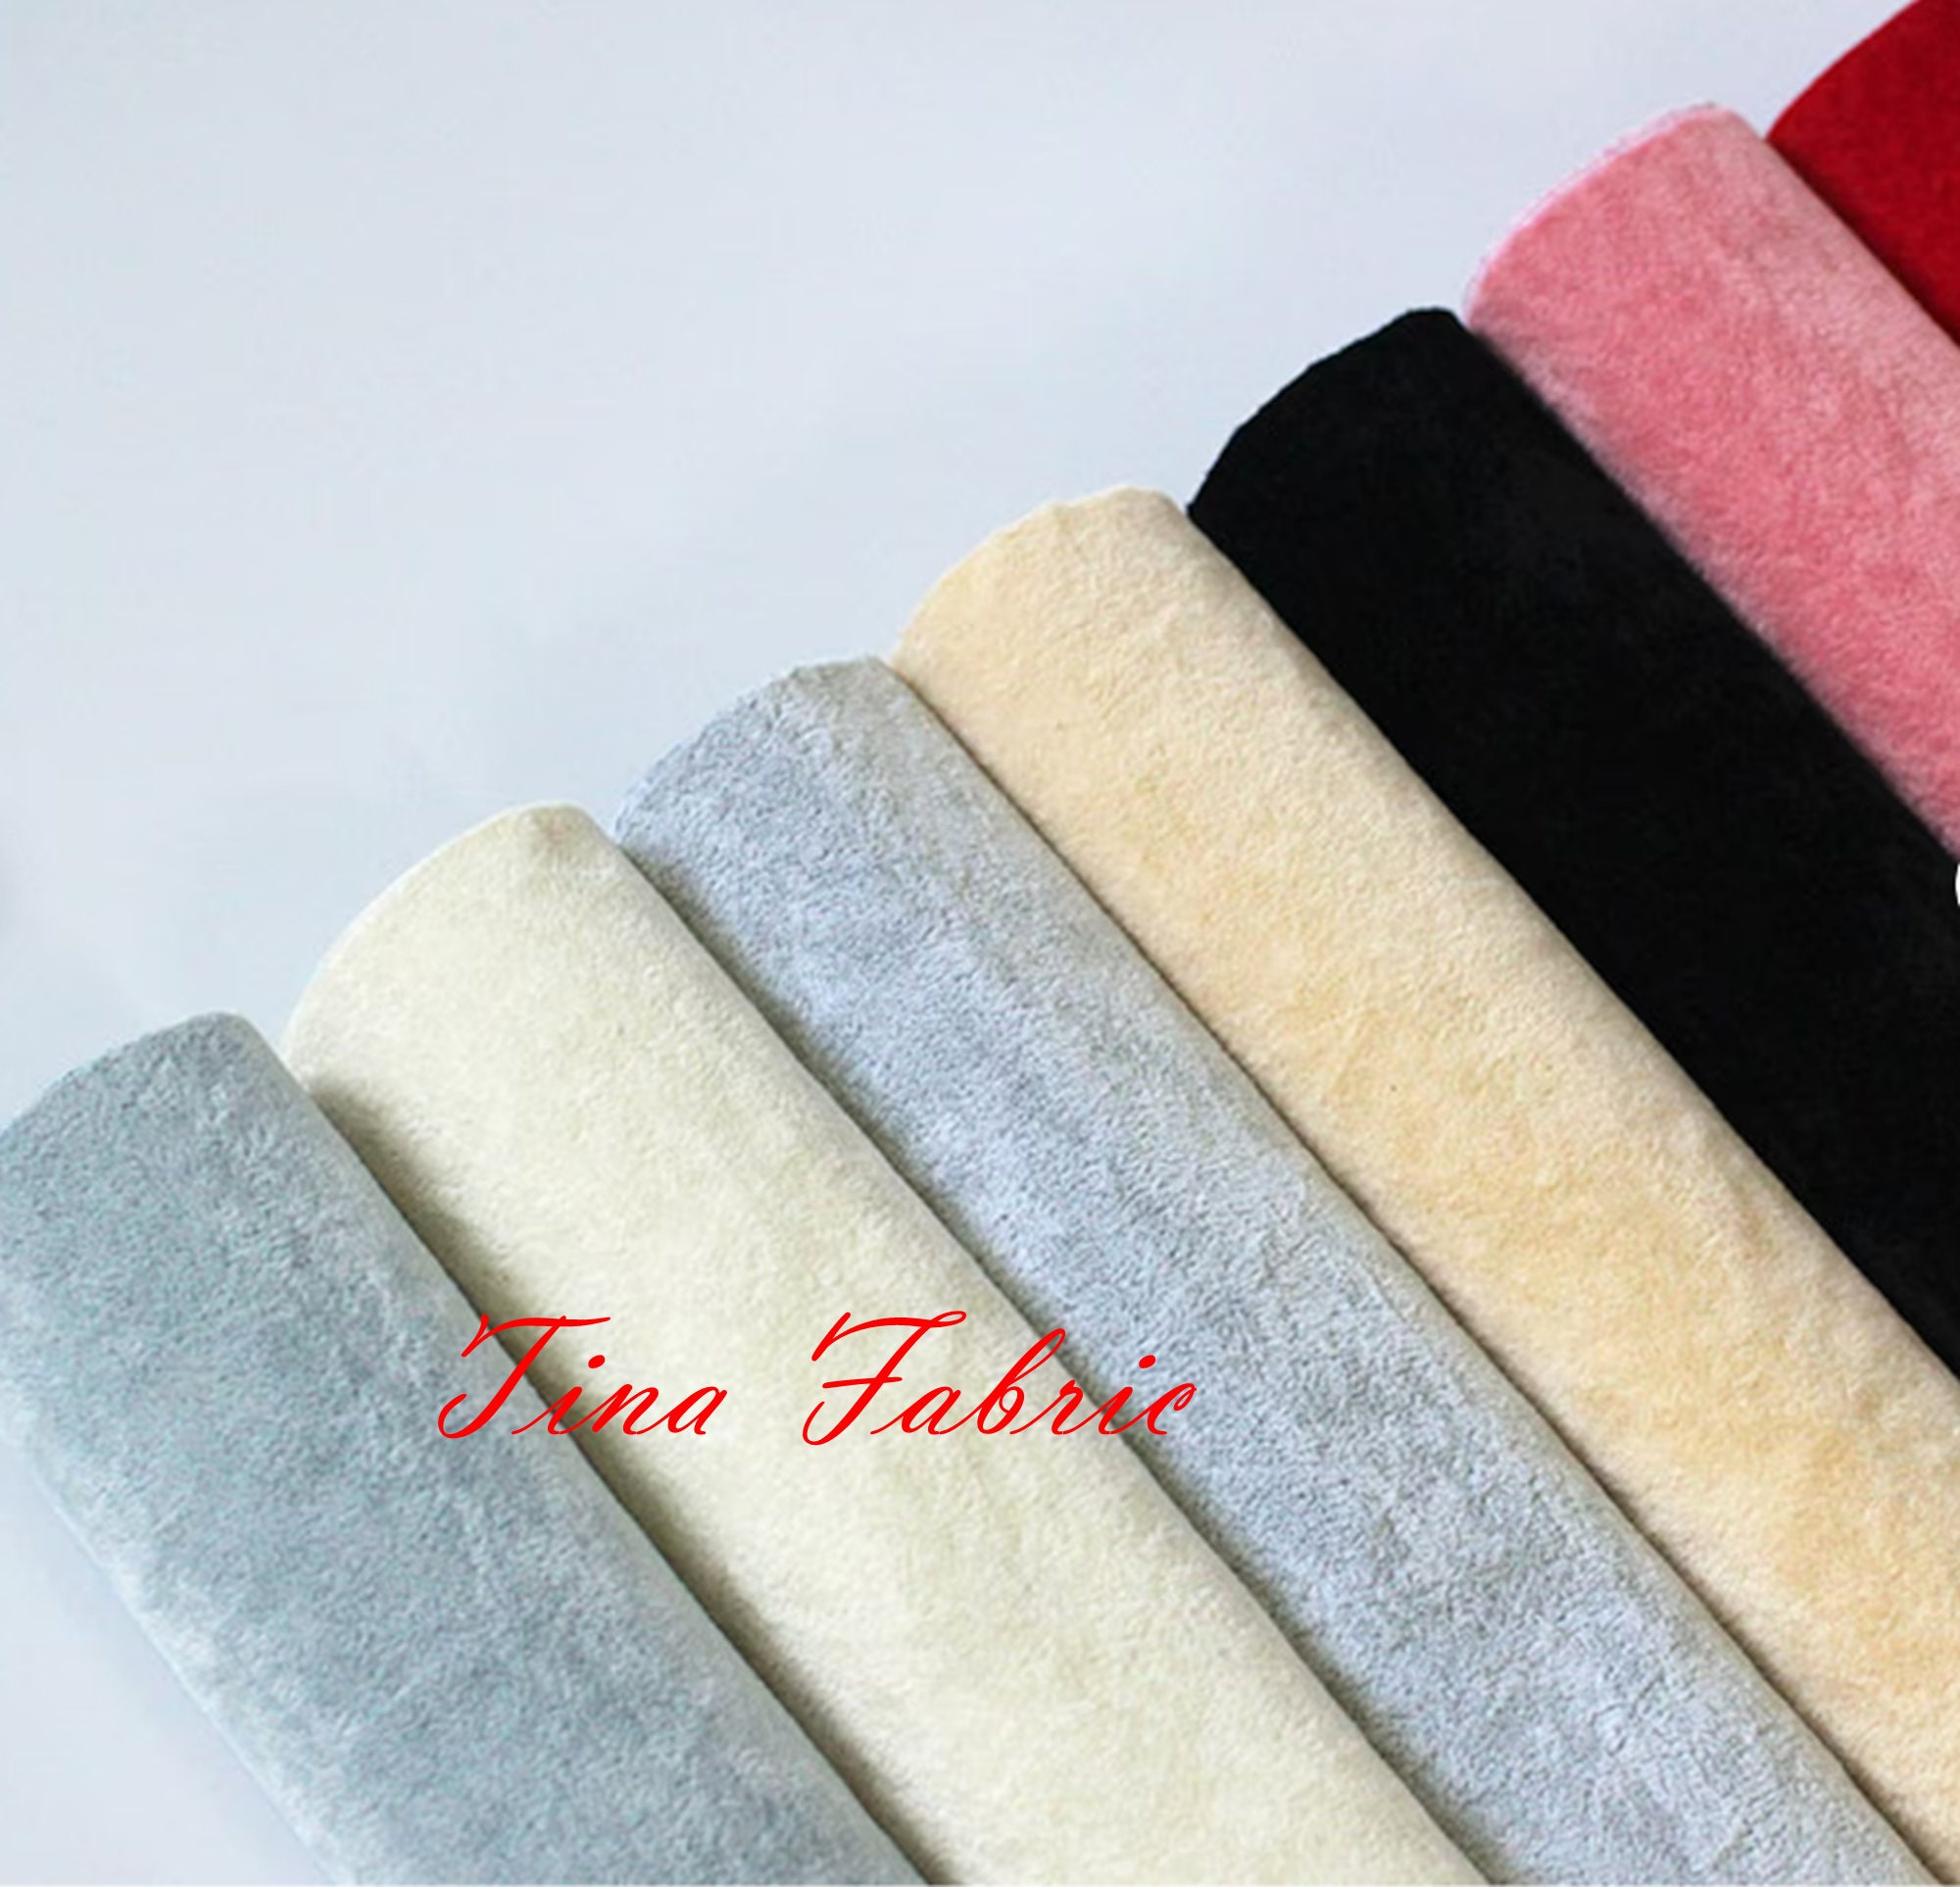 Velcro Fabric Sheets 